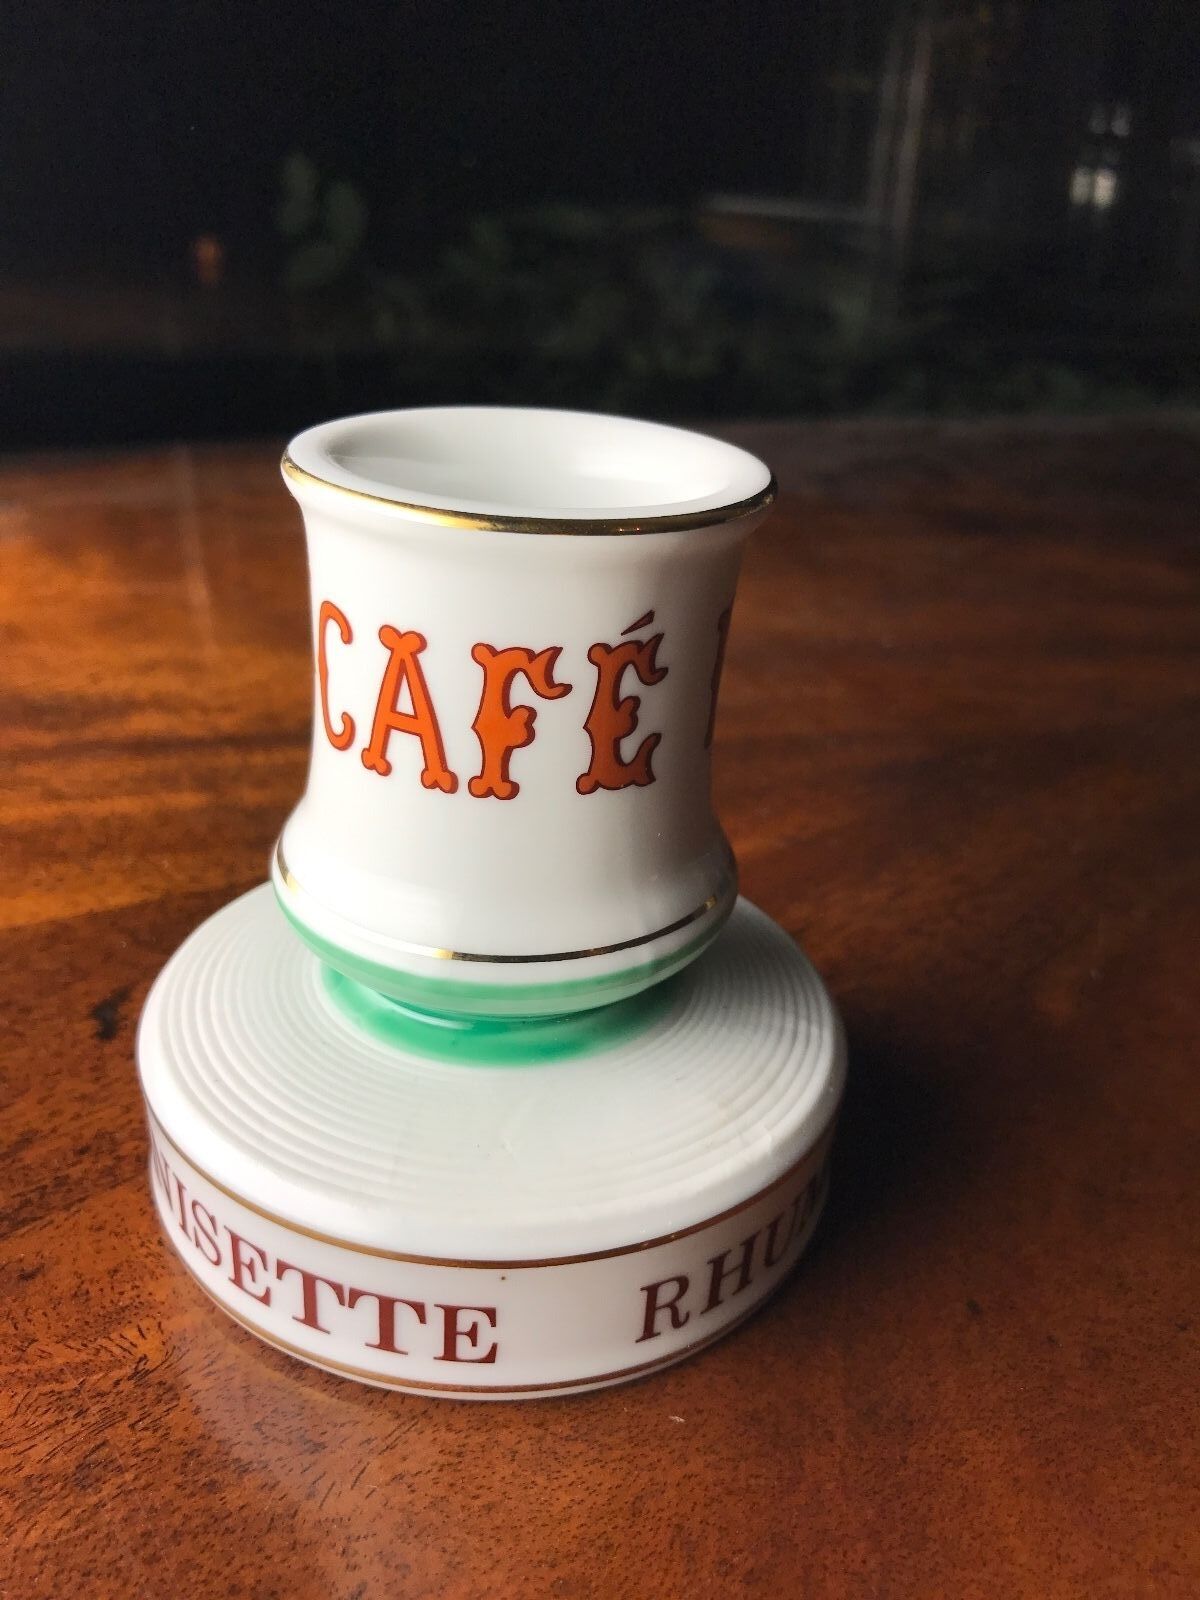 Cafe Paris French Absinthe Match Striker Holder Porcelain French Pyrogene